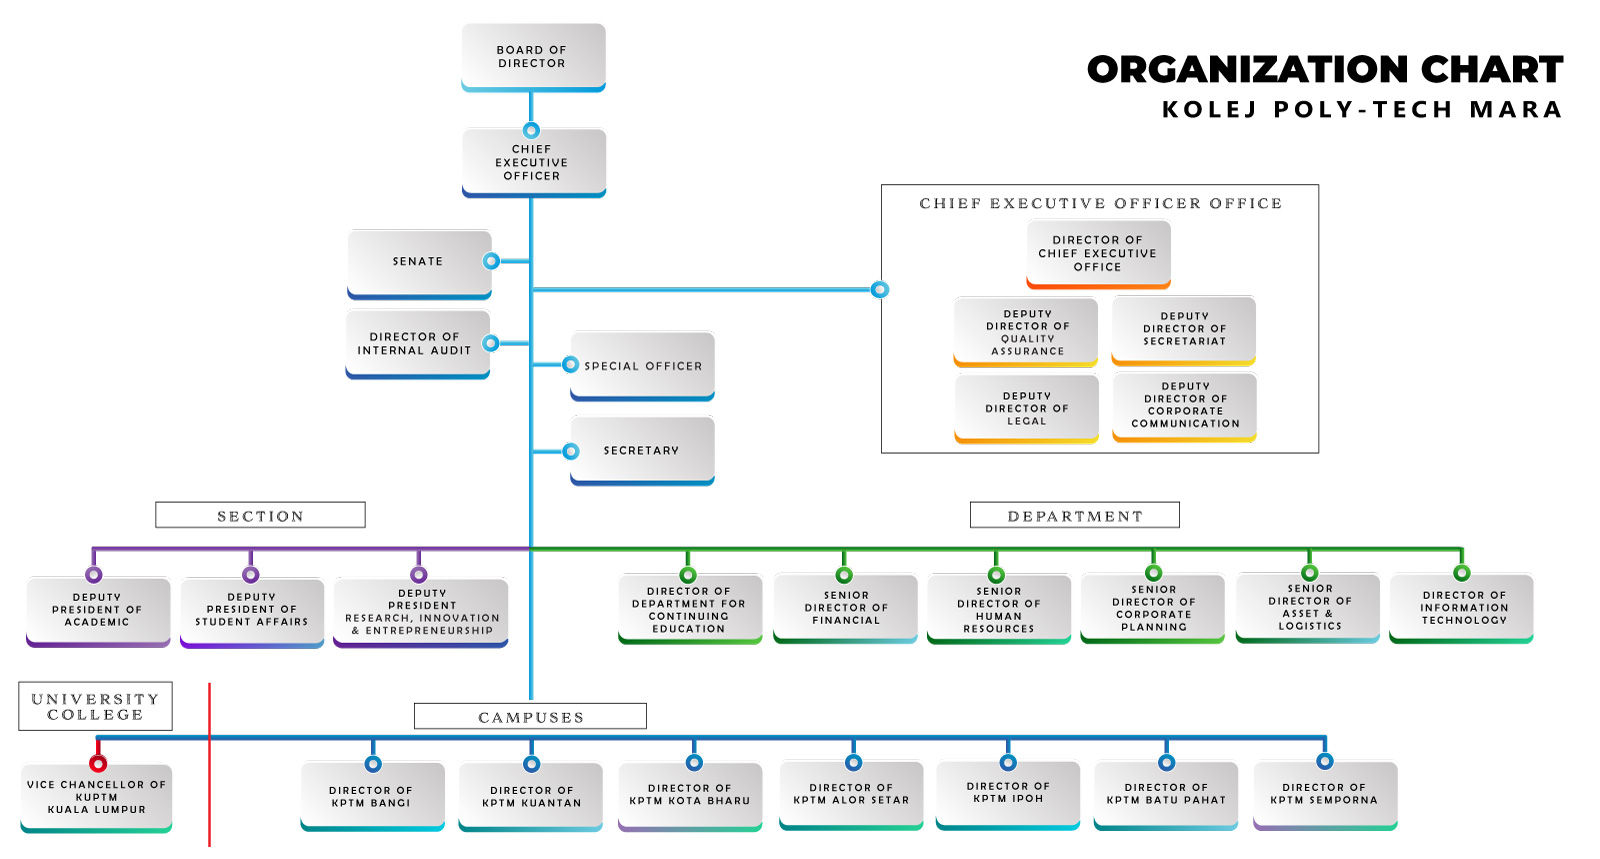 KPTM Organization Chart